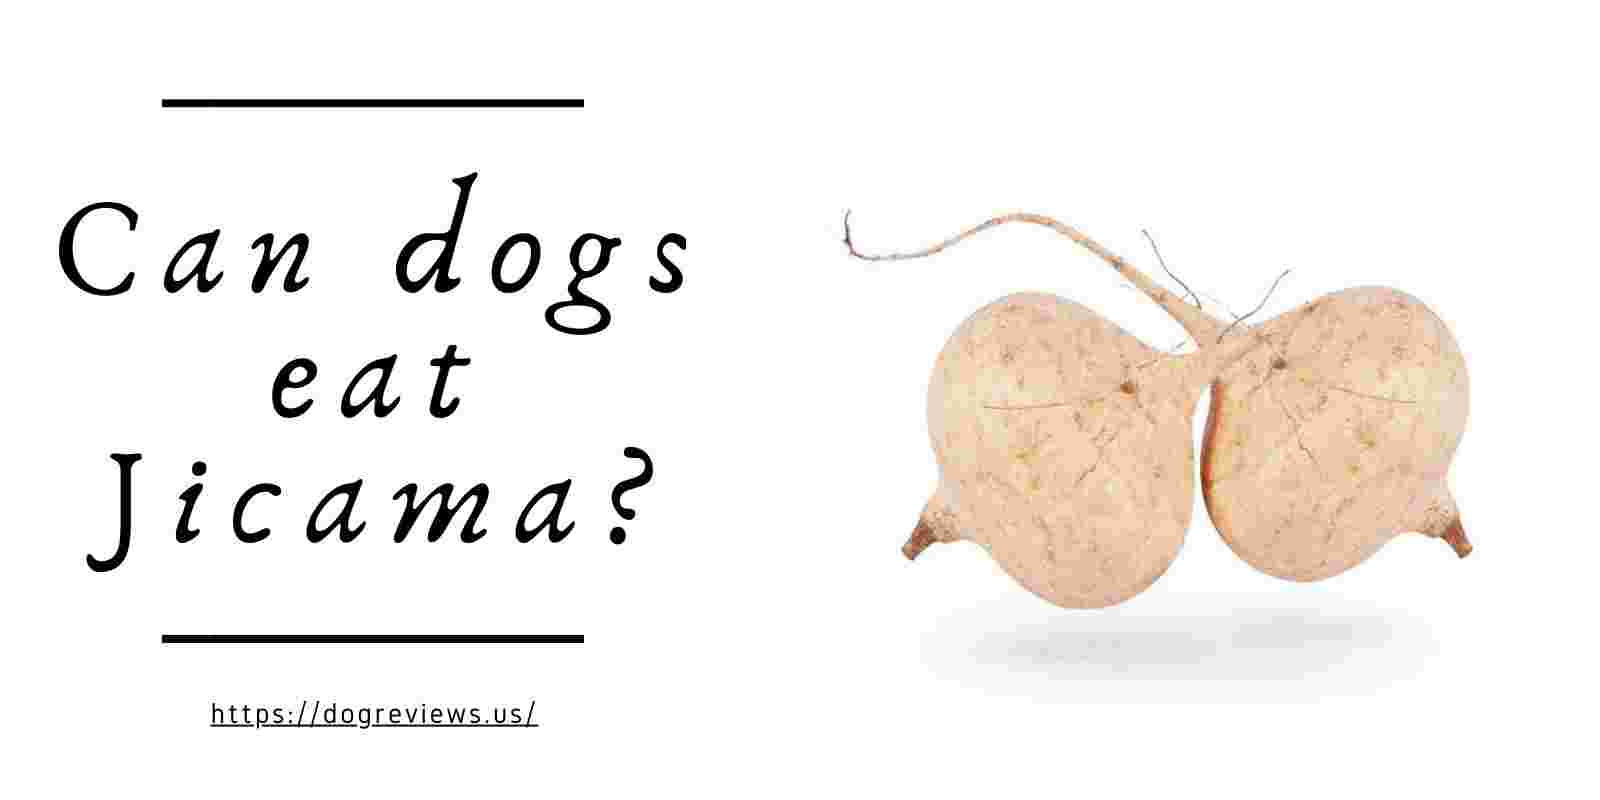 Can dogs eat Jicama?